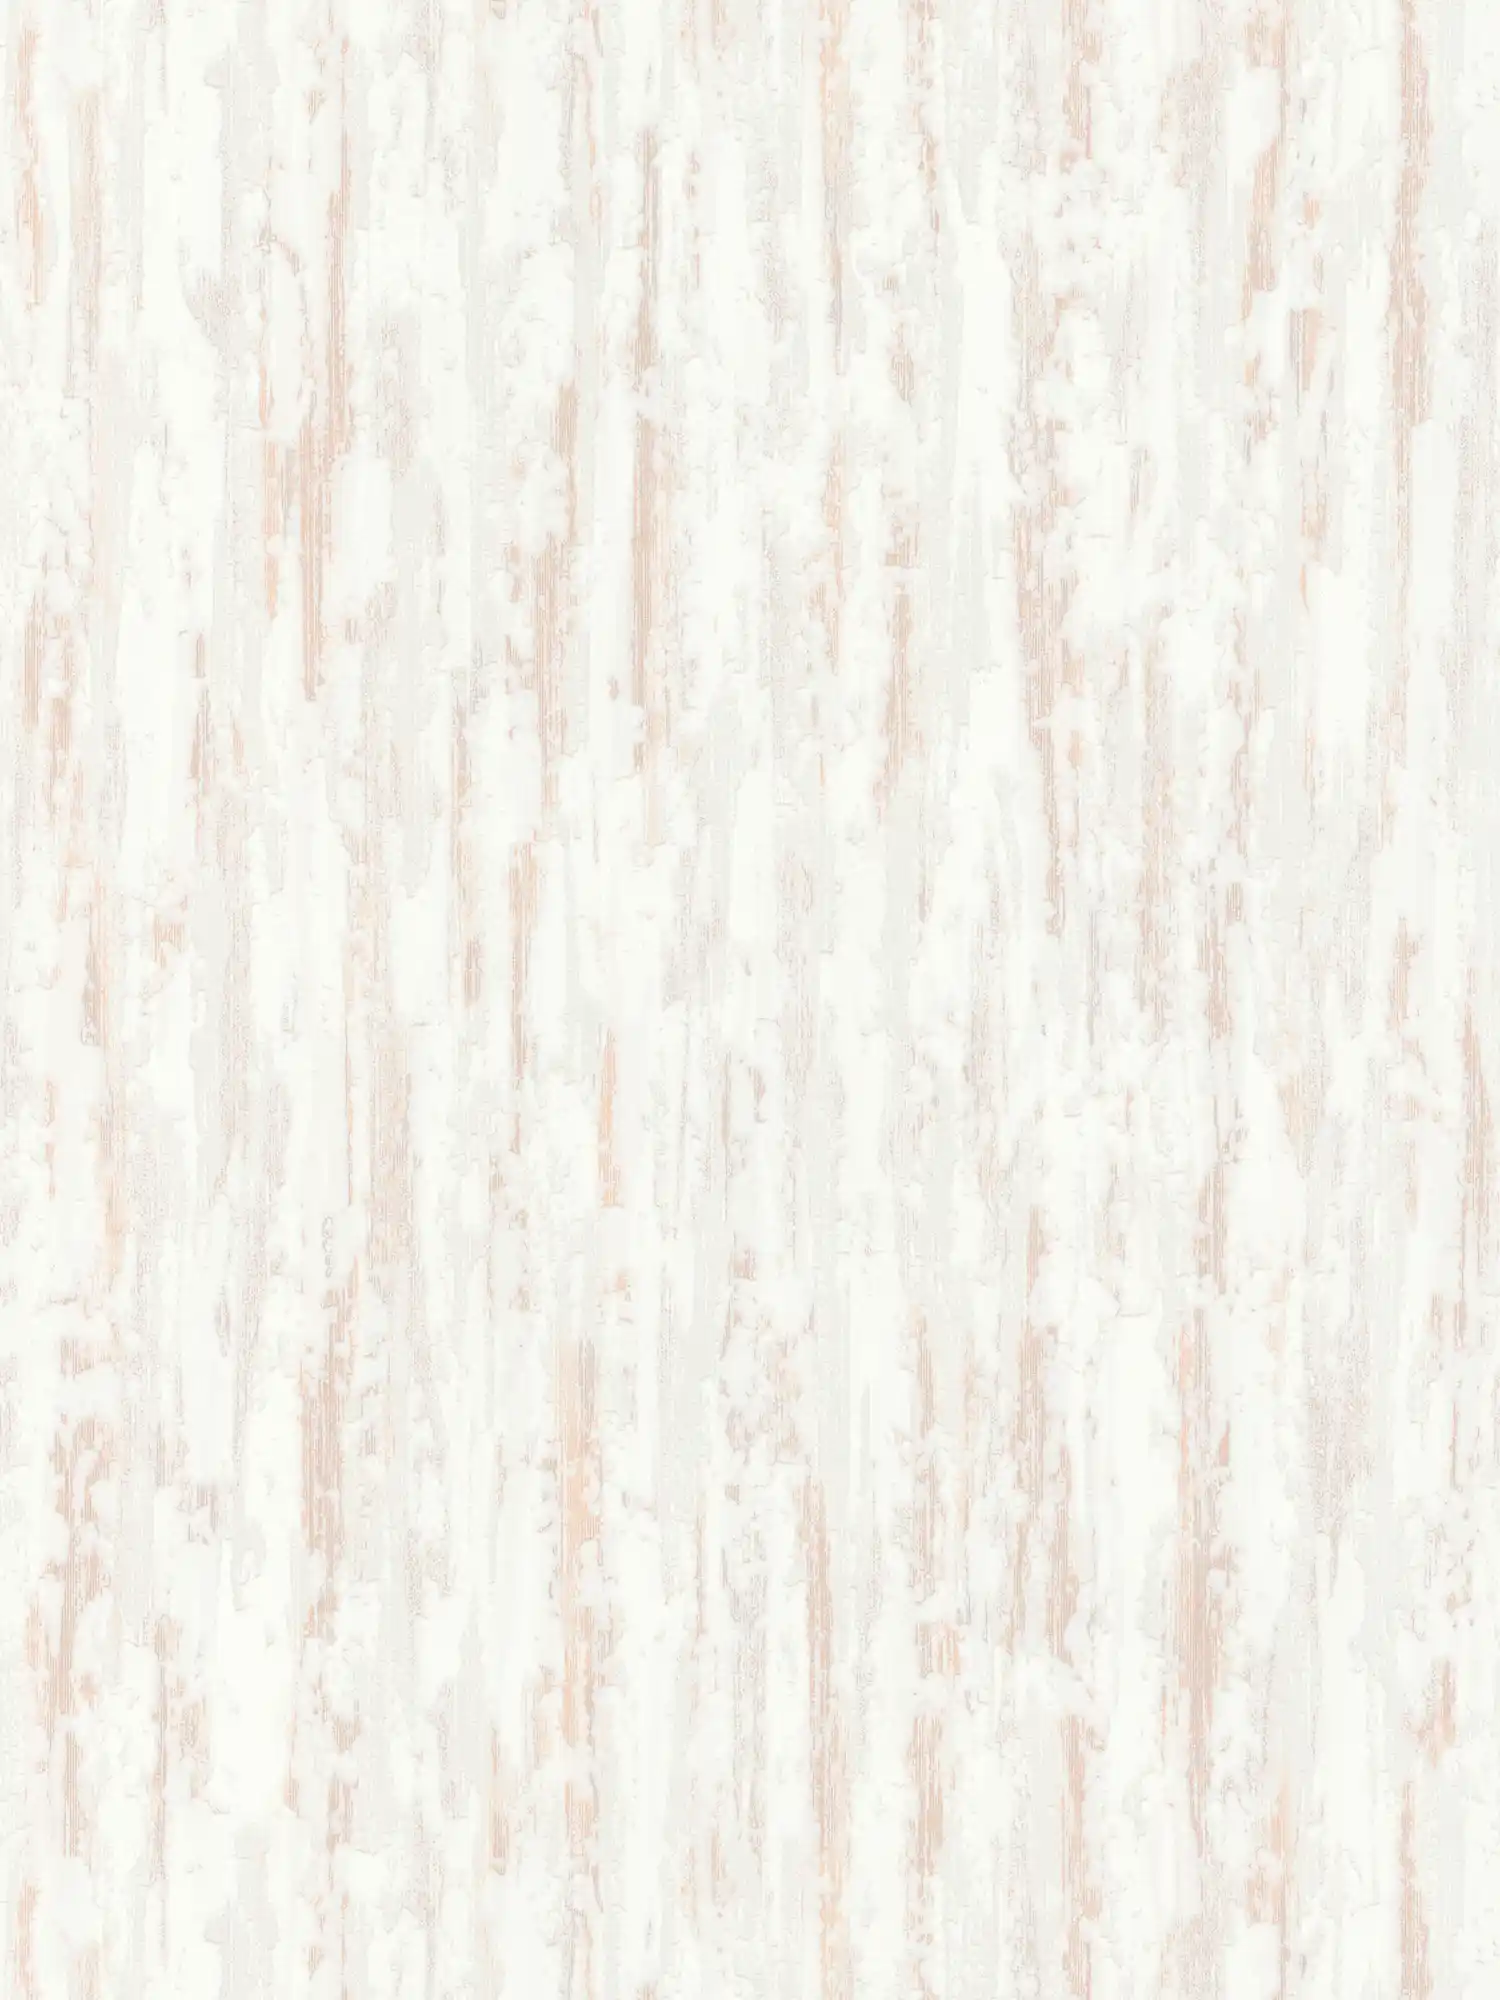 Cream mottled wallpaper with plaster texture - beige, brown, white
